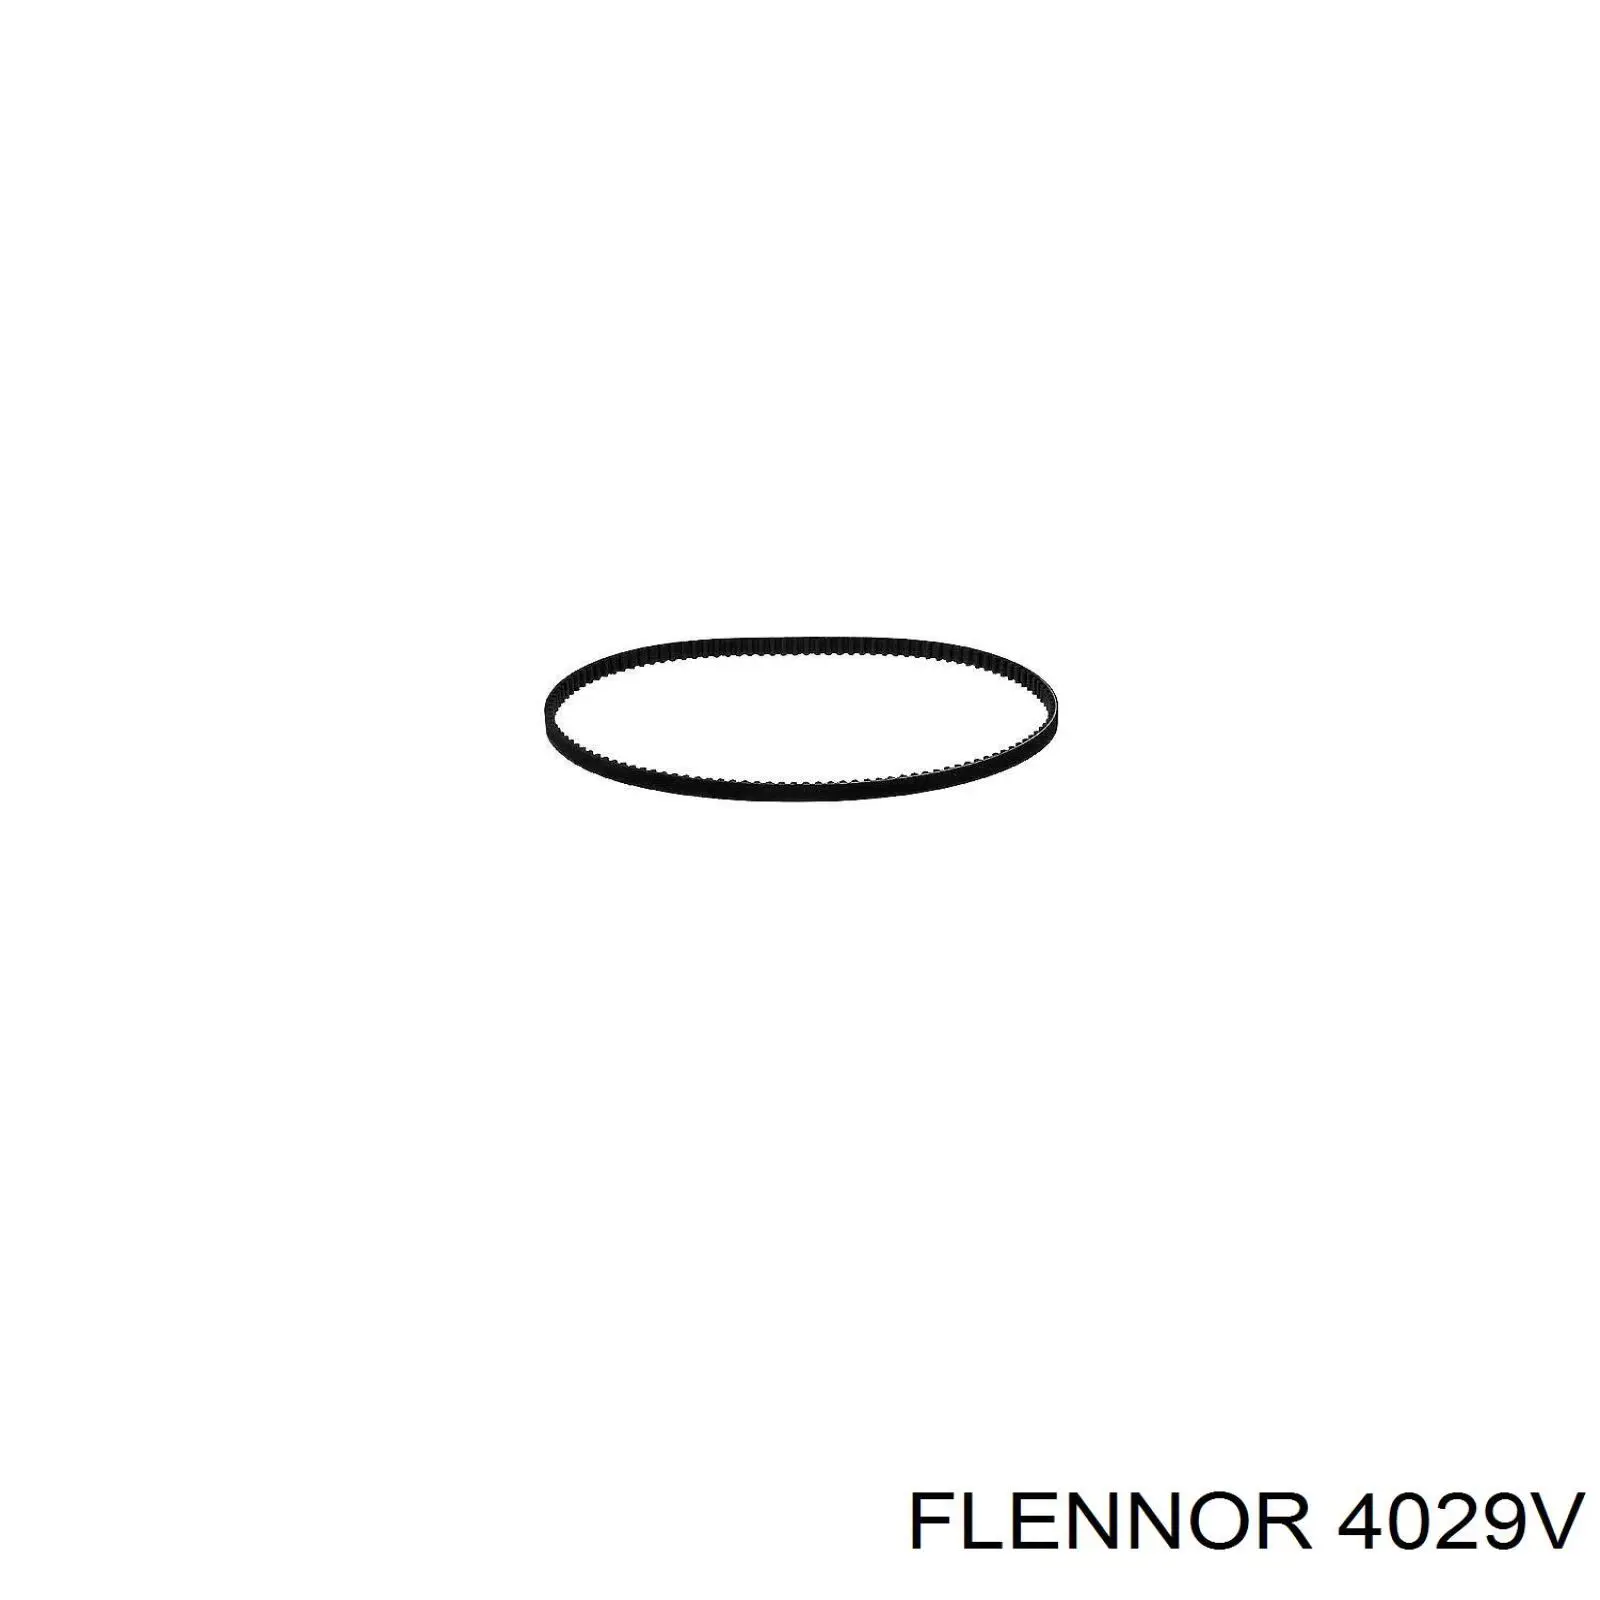 4029V Flennor correa distribucion